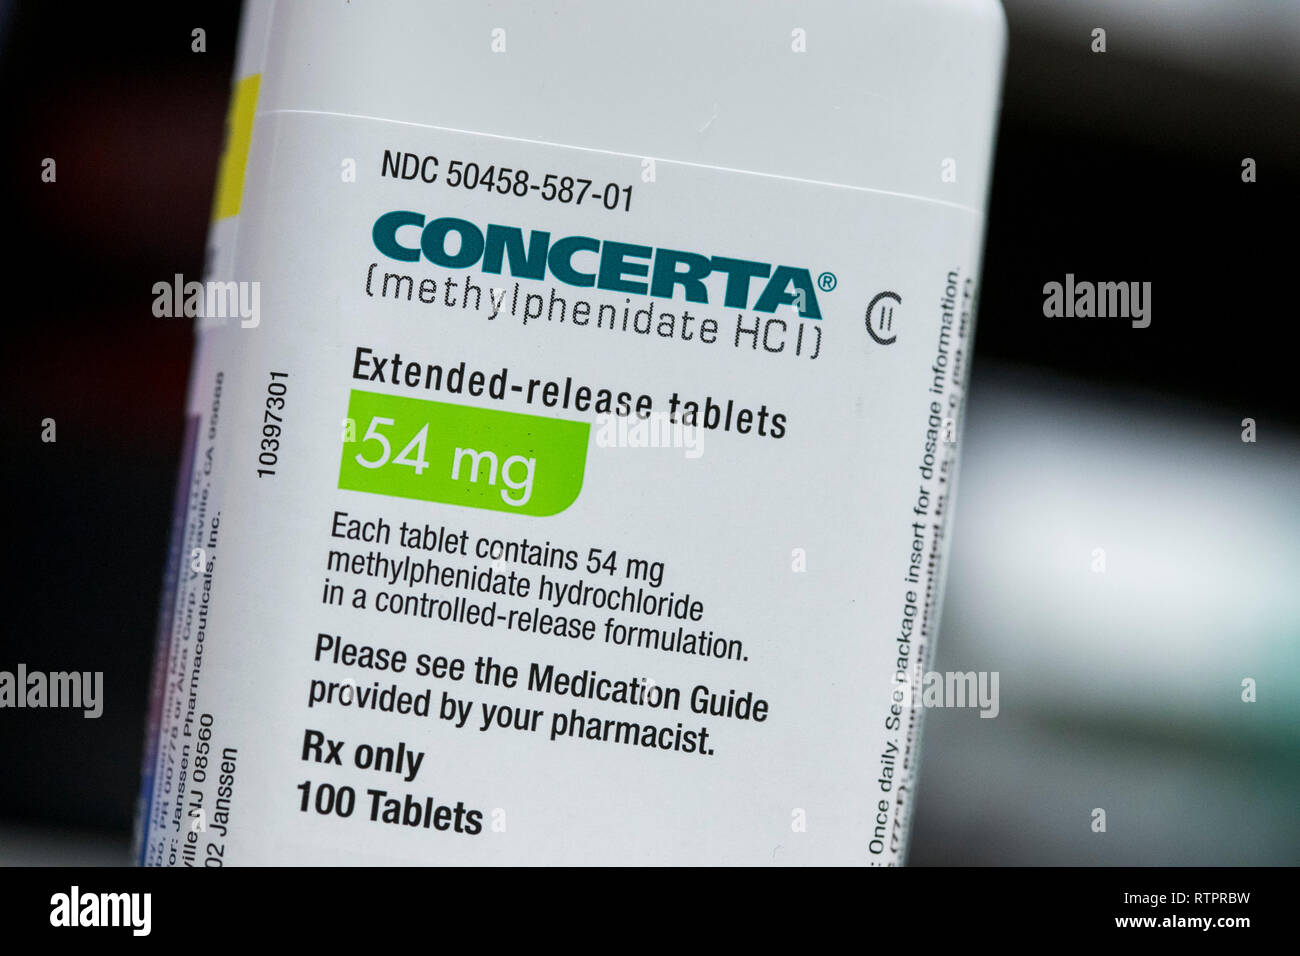 a-bottle-of-concerta-methylphenidate-prescription-pharmaceuticals